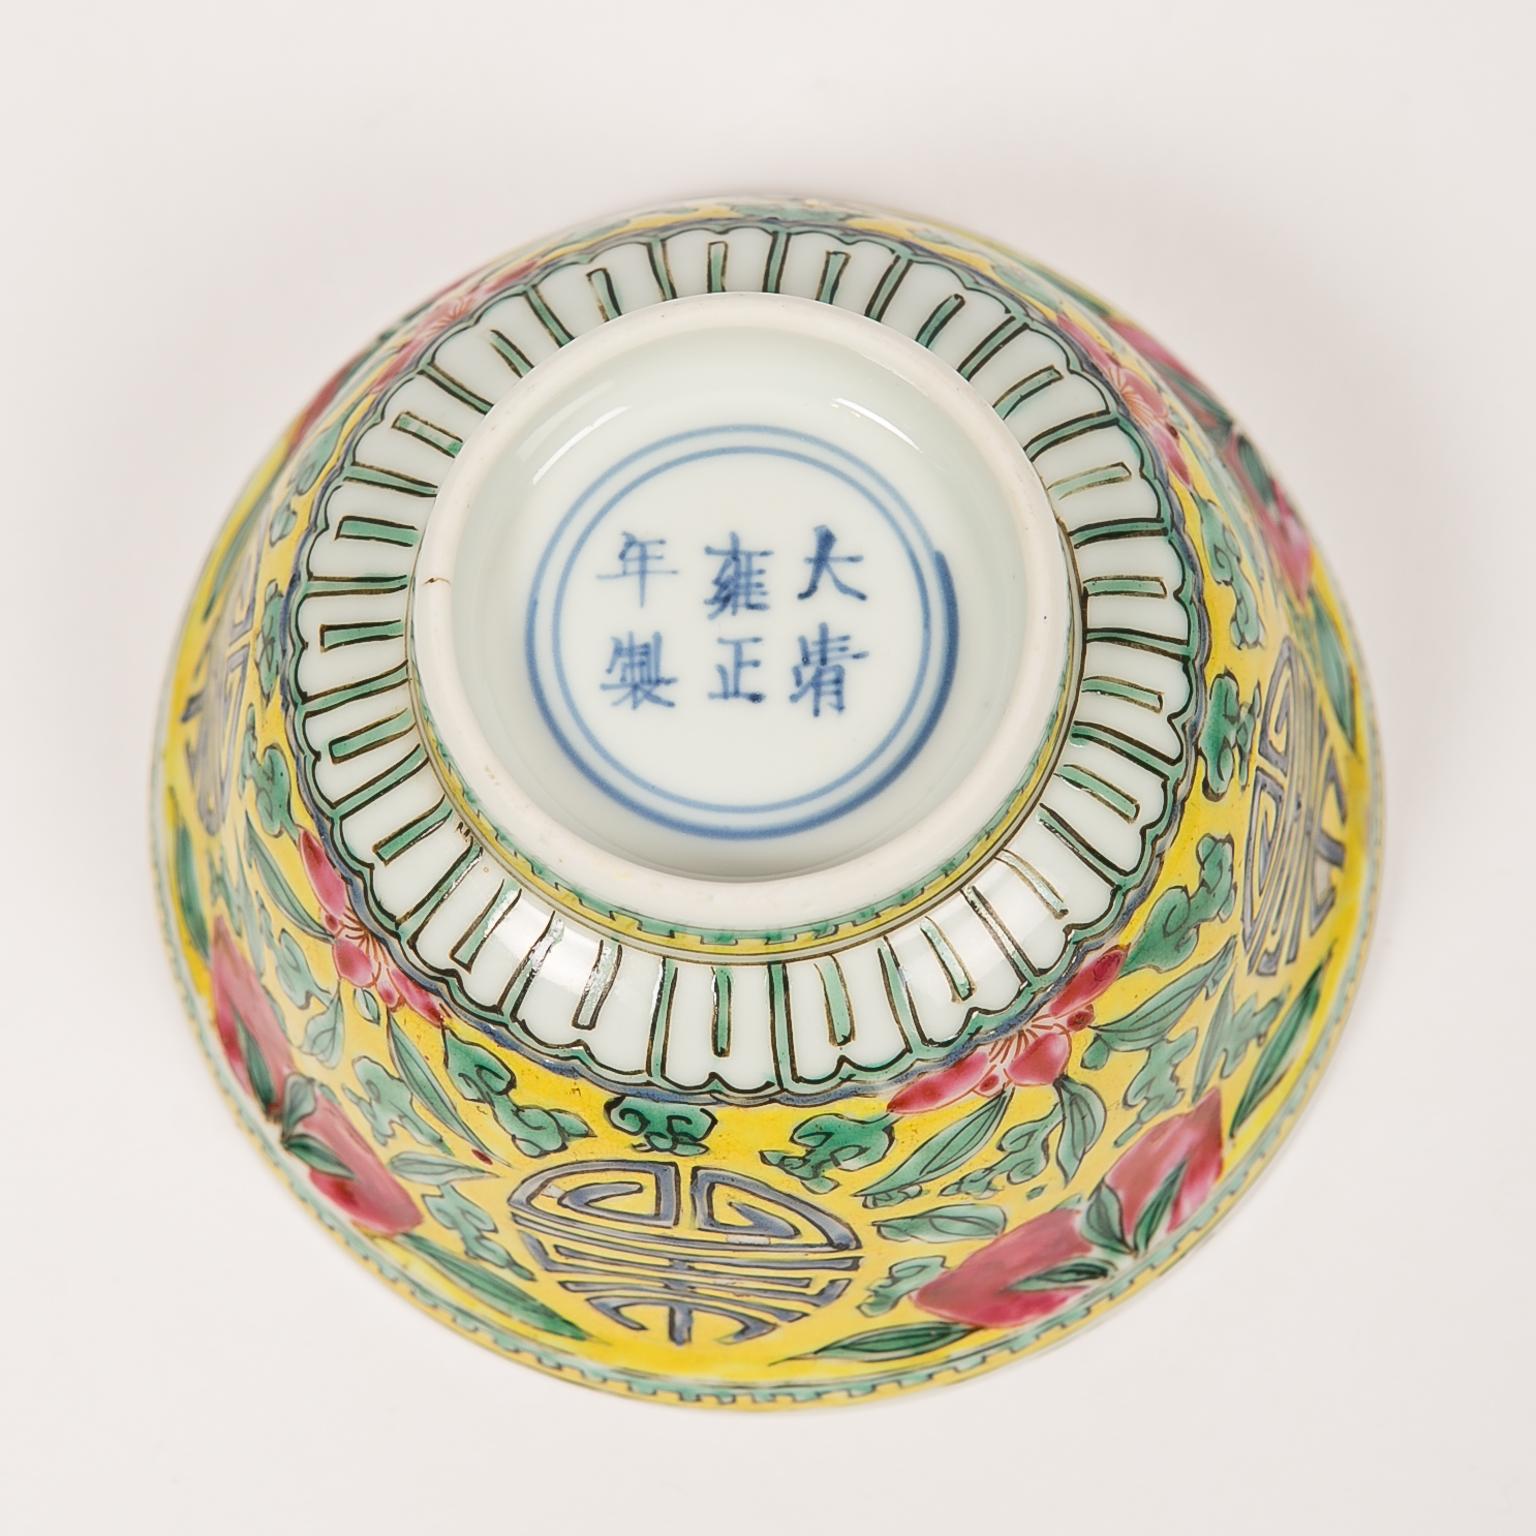 chinese symbols on pottery